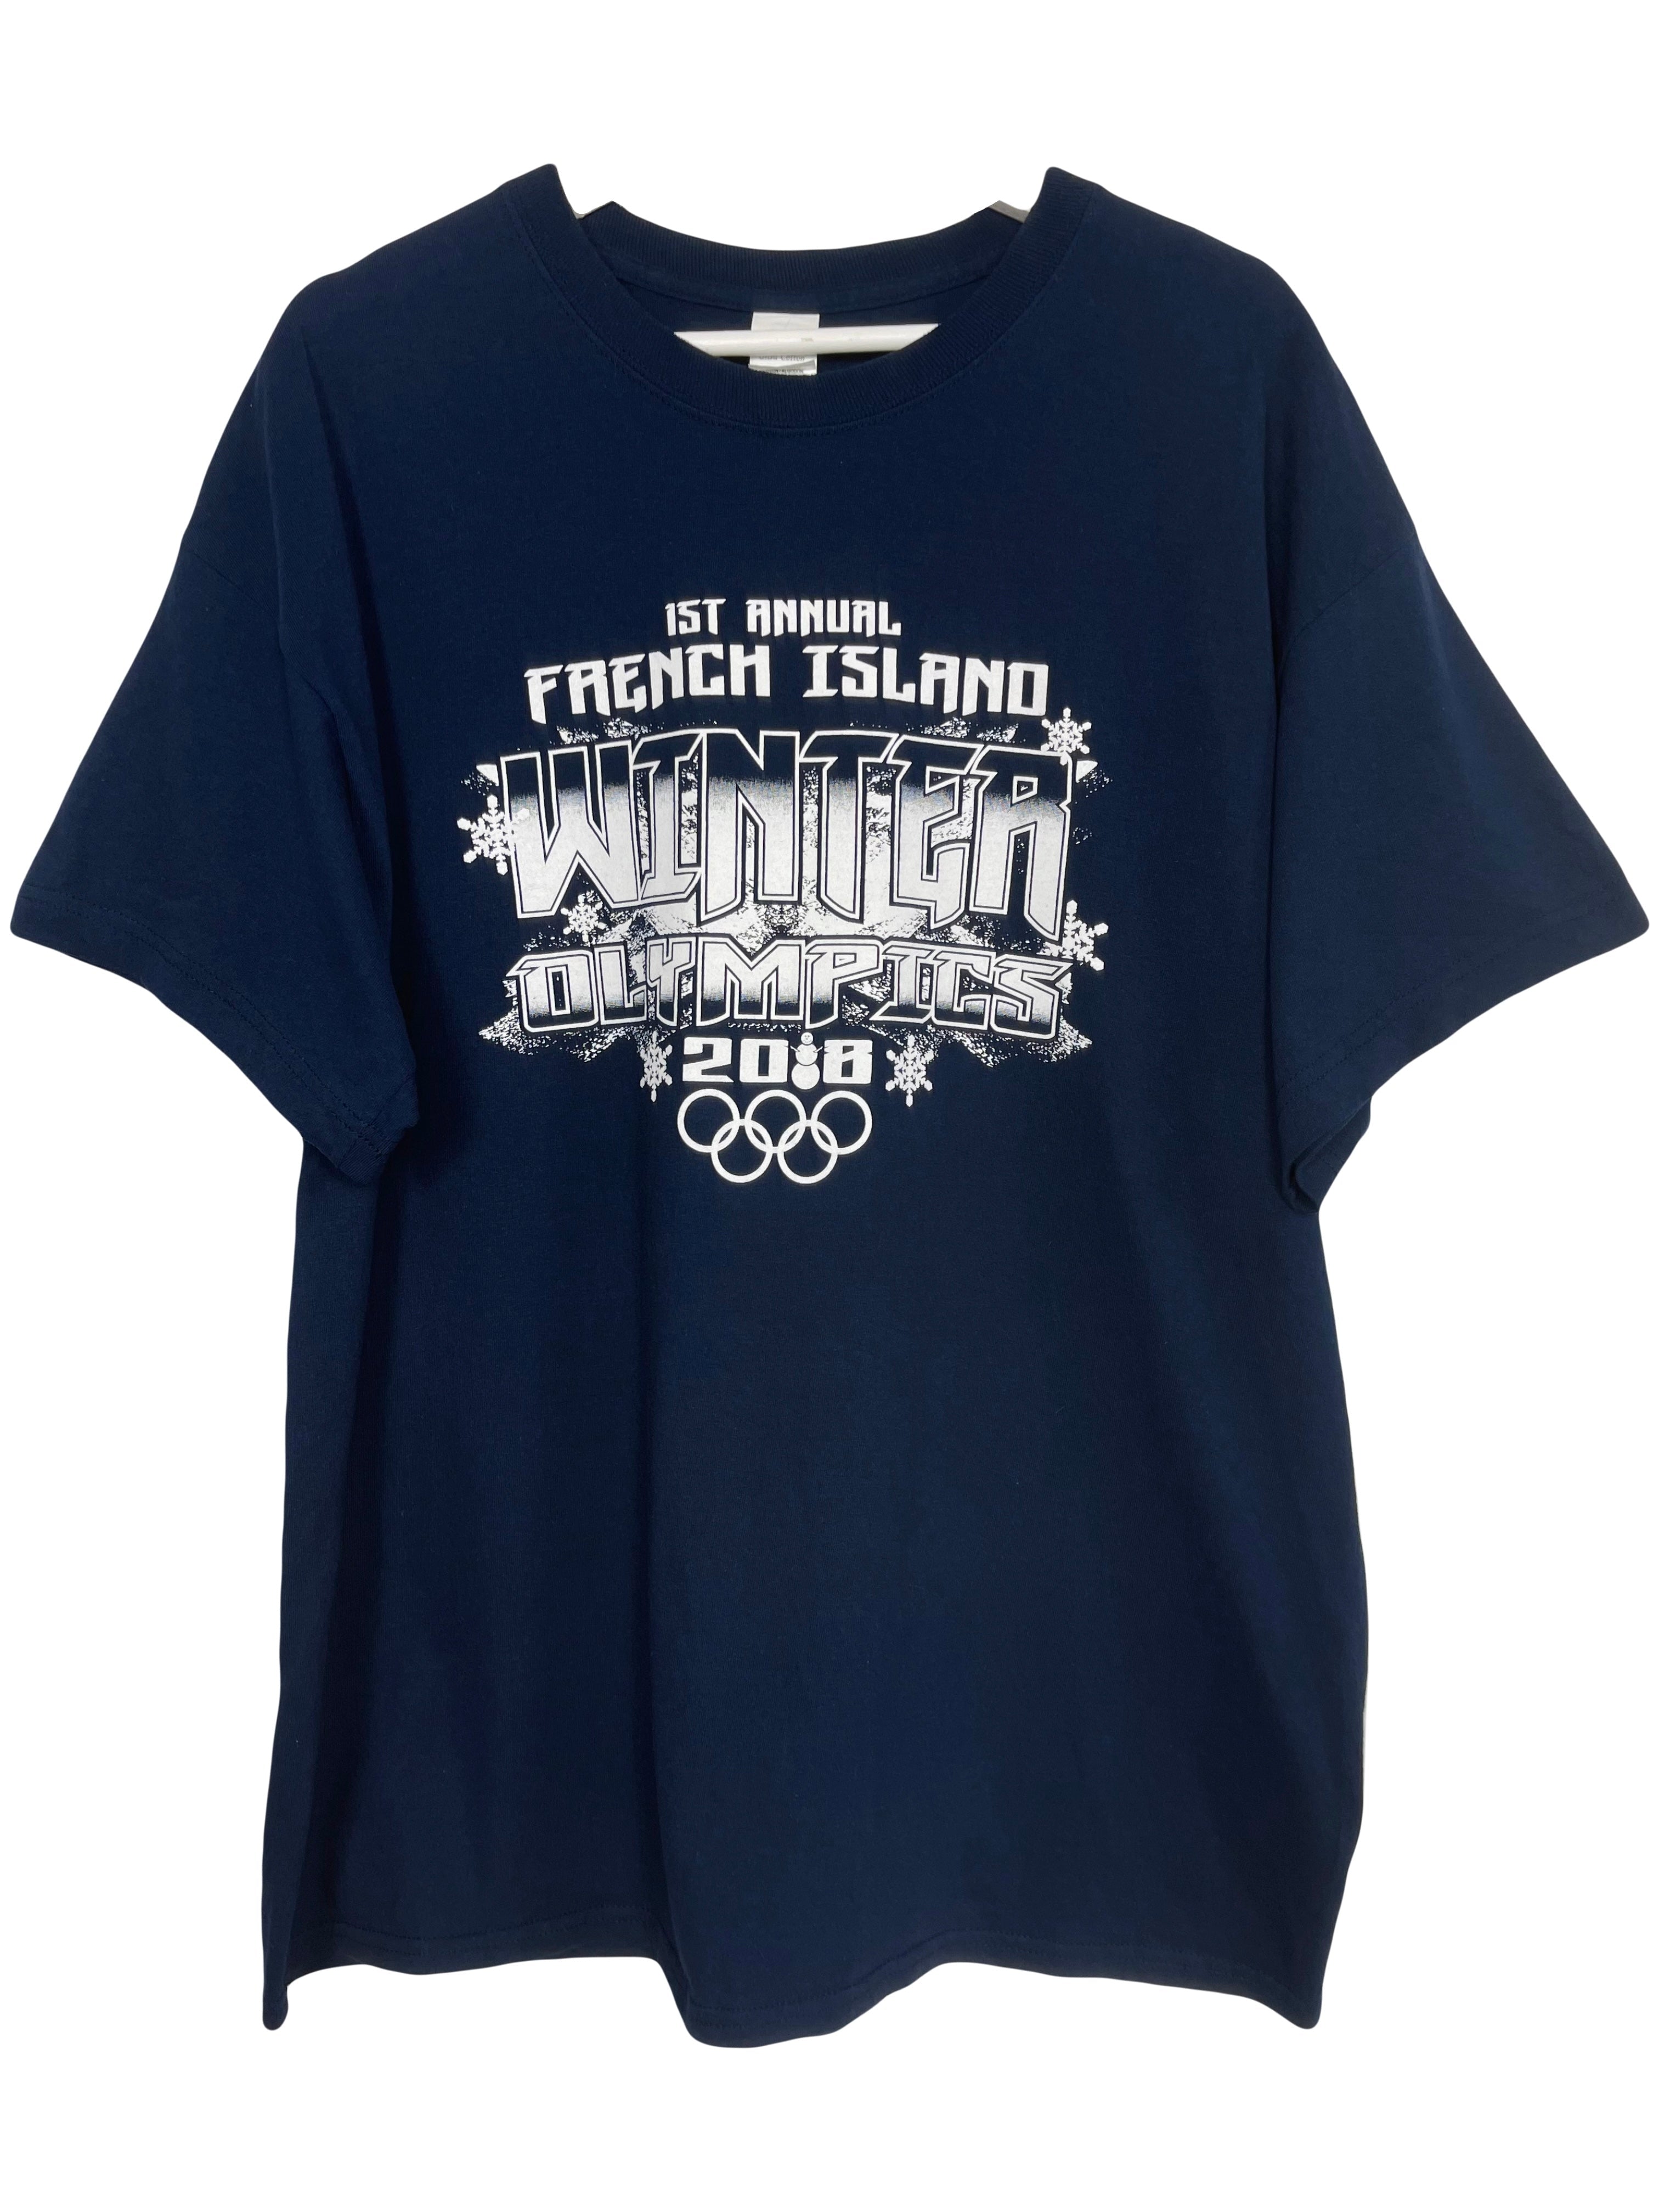 T-shirt - French Island Winter Olympics - XL - PLOMOSTORE - Friperie en ligne